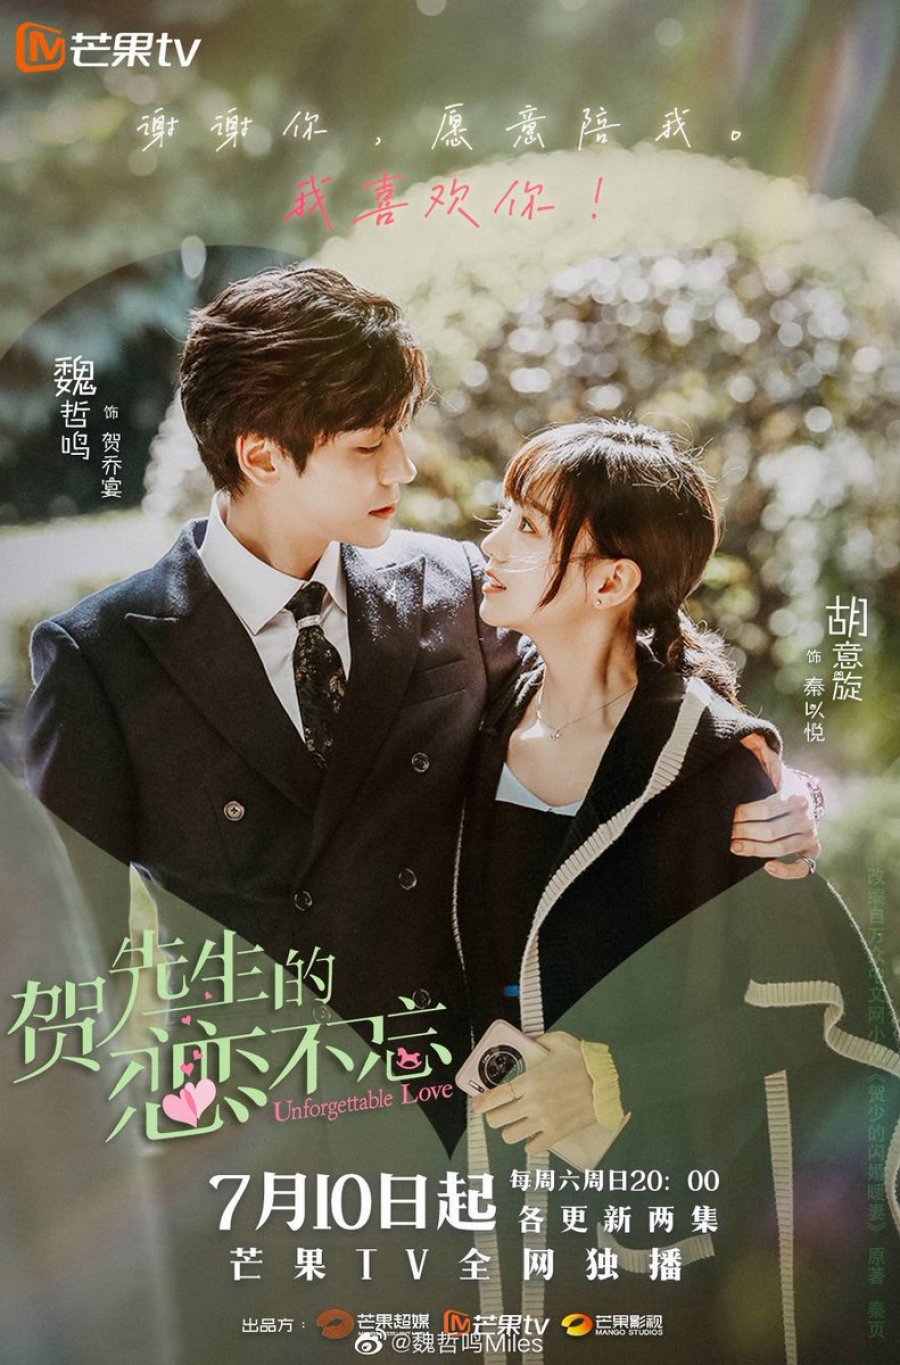 Unforgettable Love (Drama China 2021) : Sinopsis dan Review